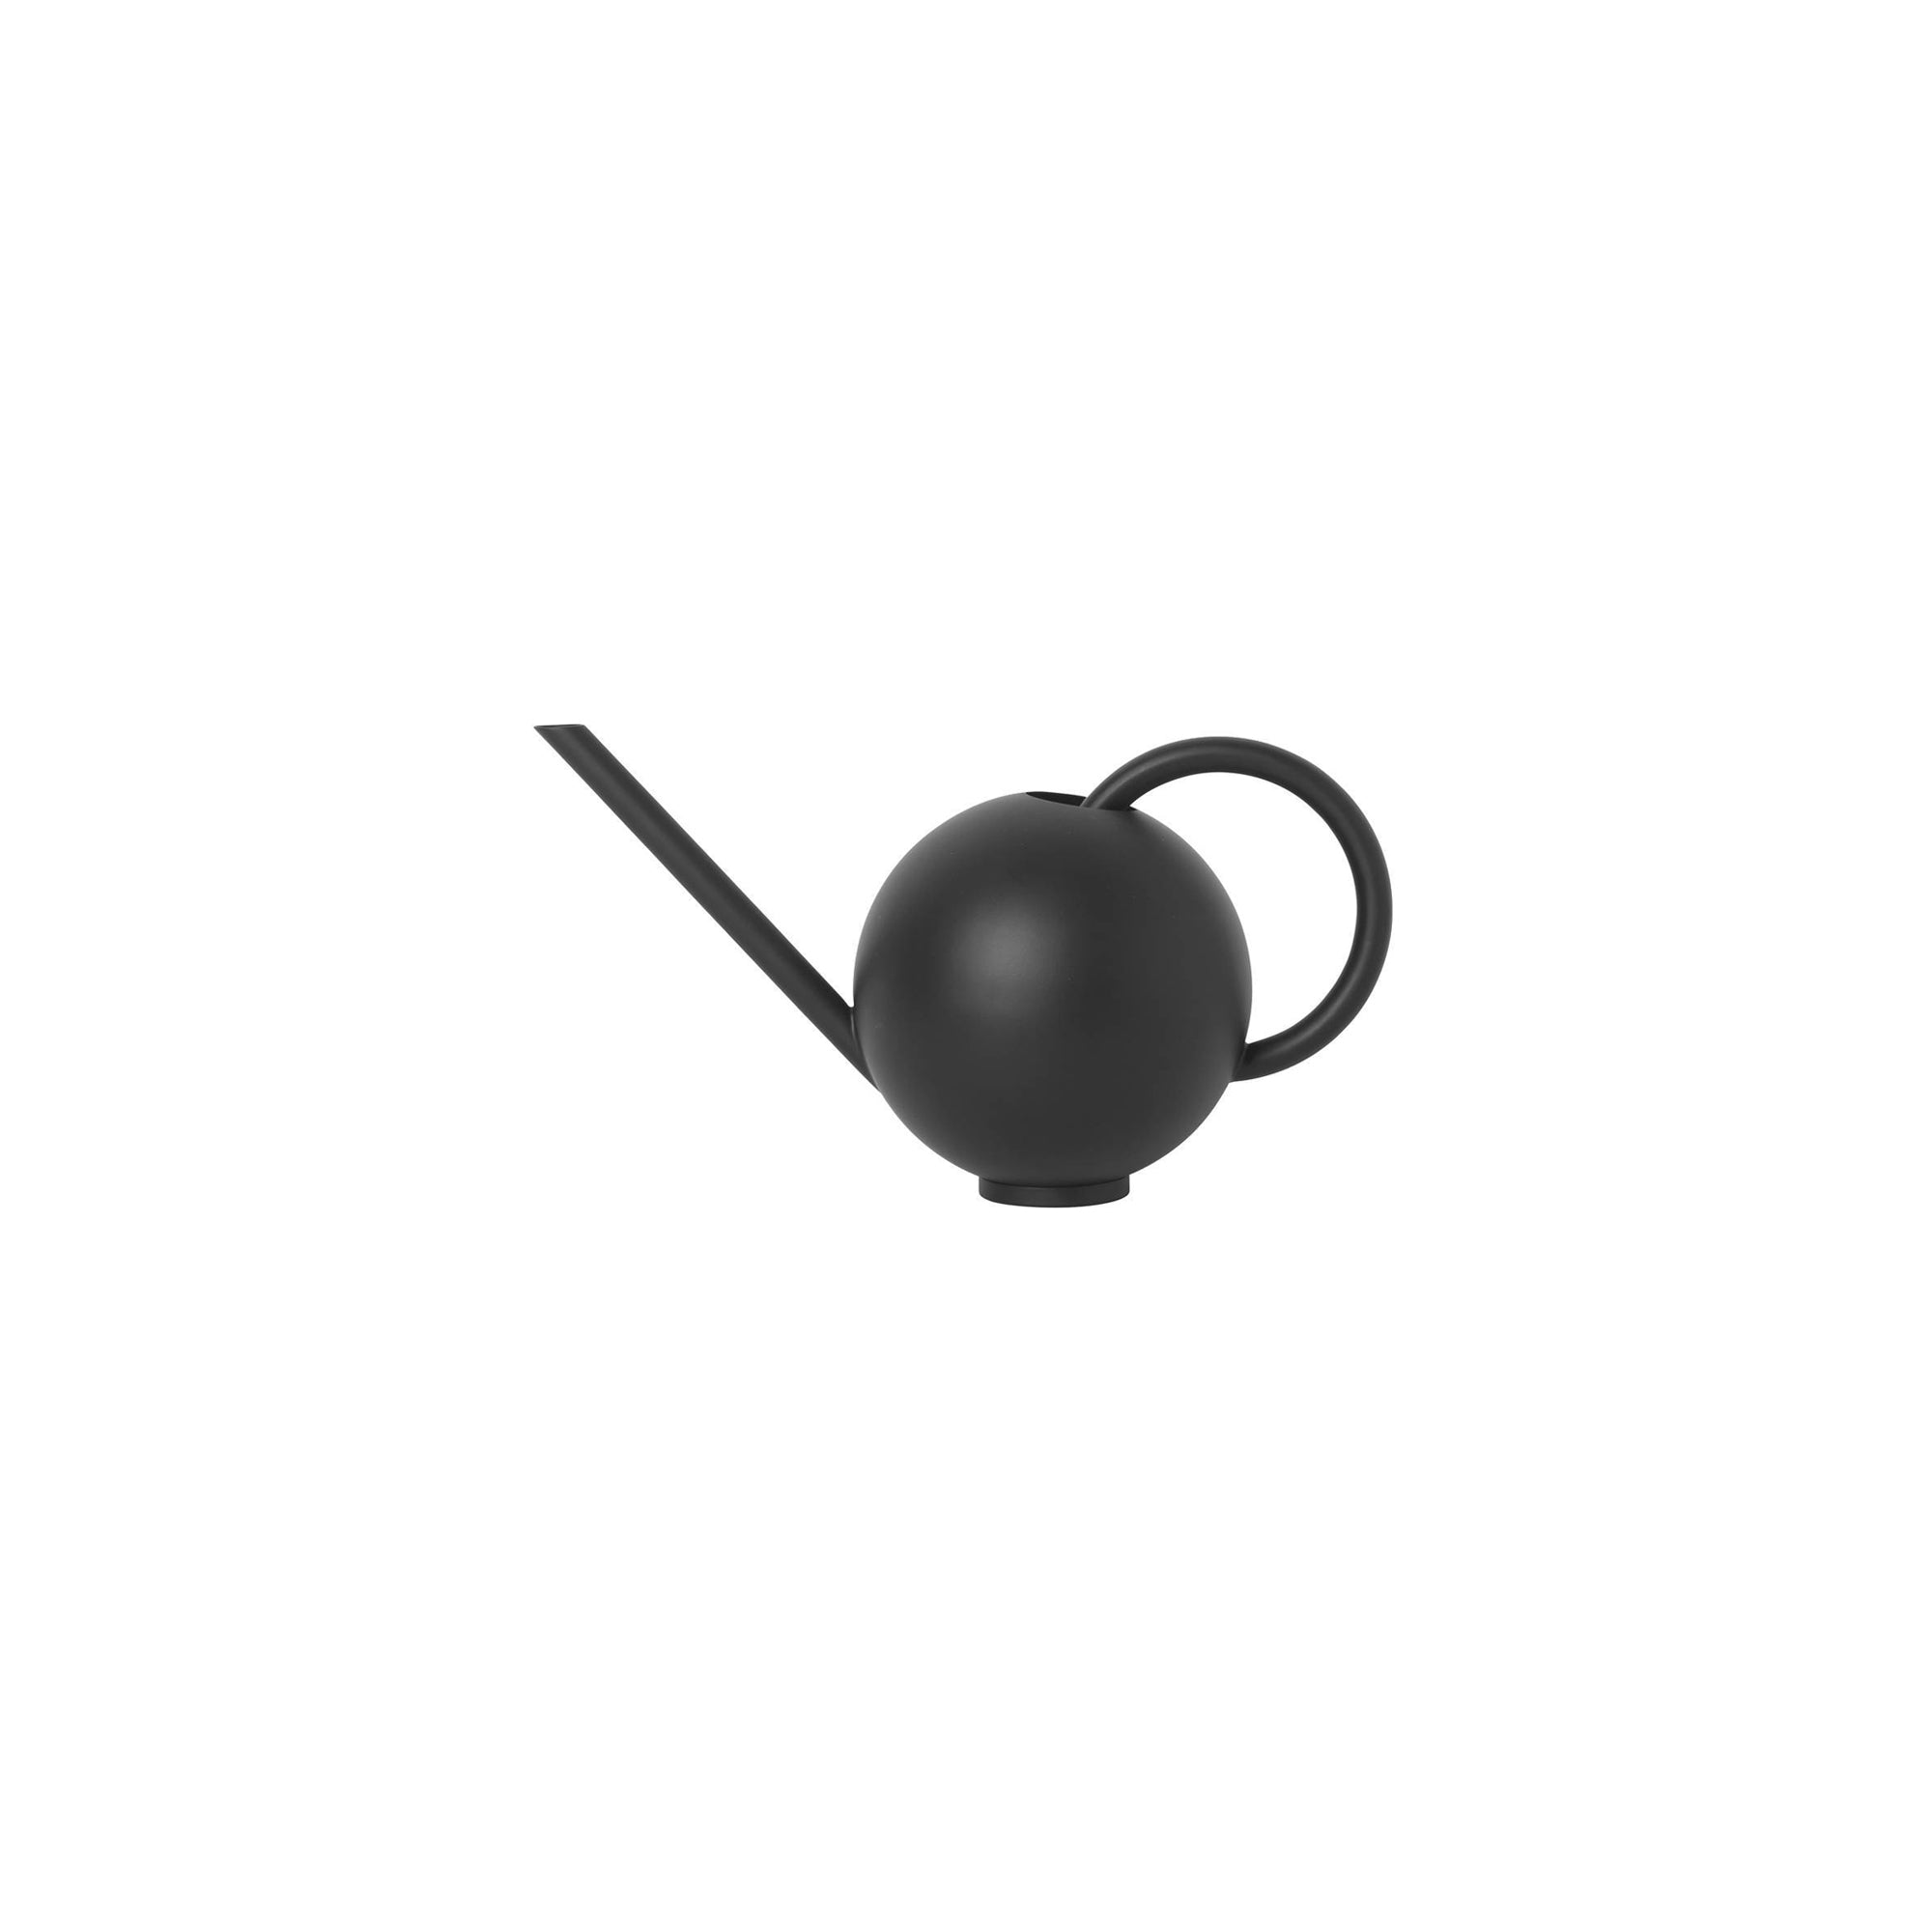 Orb Watering Can: Black